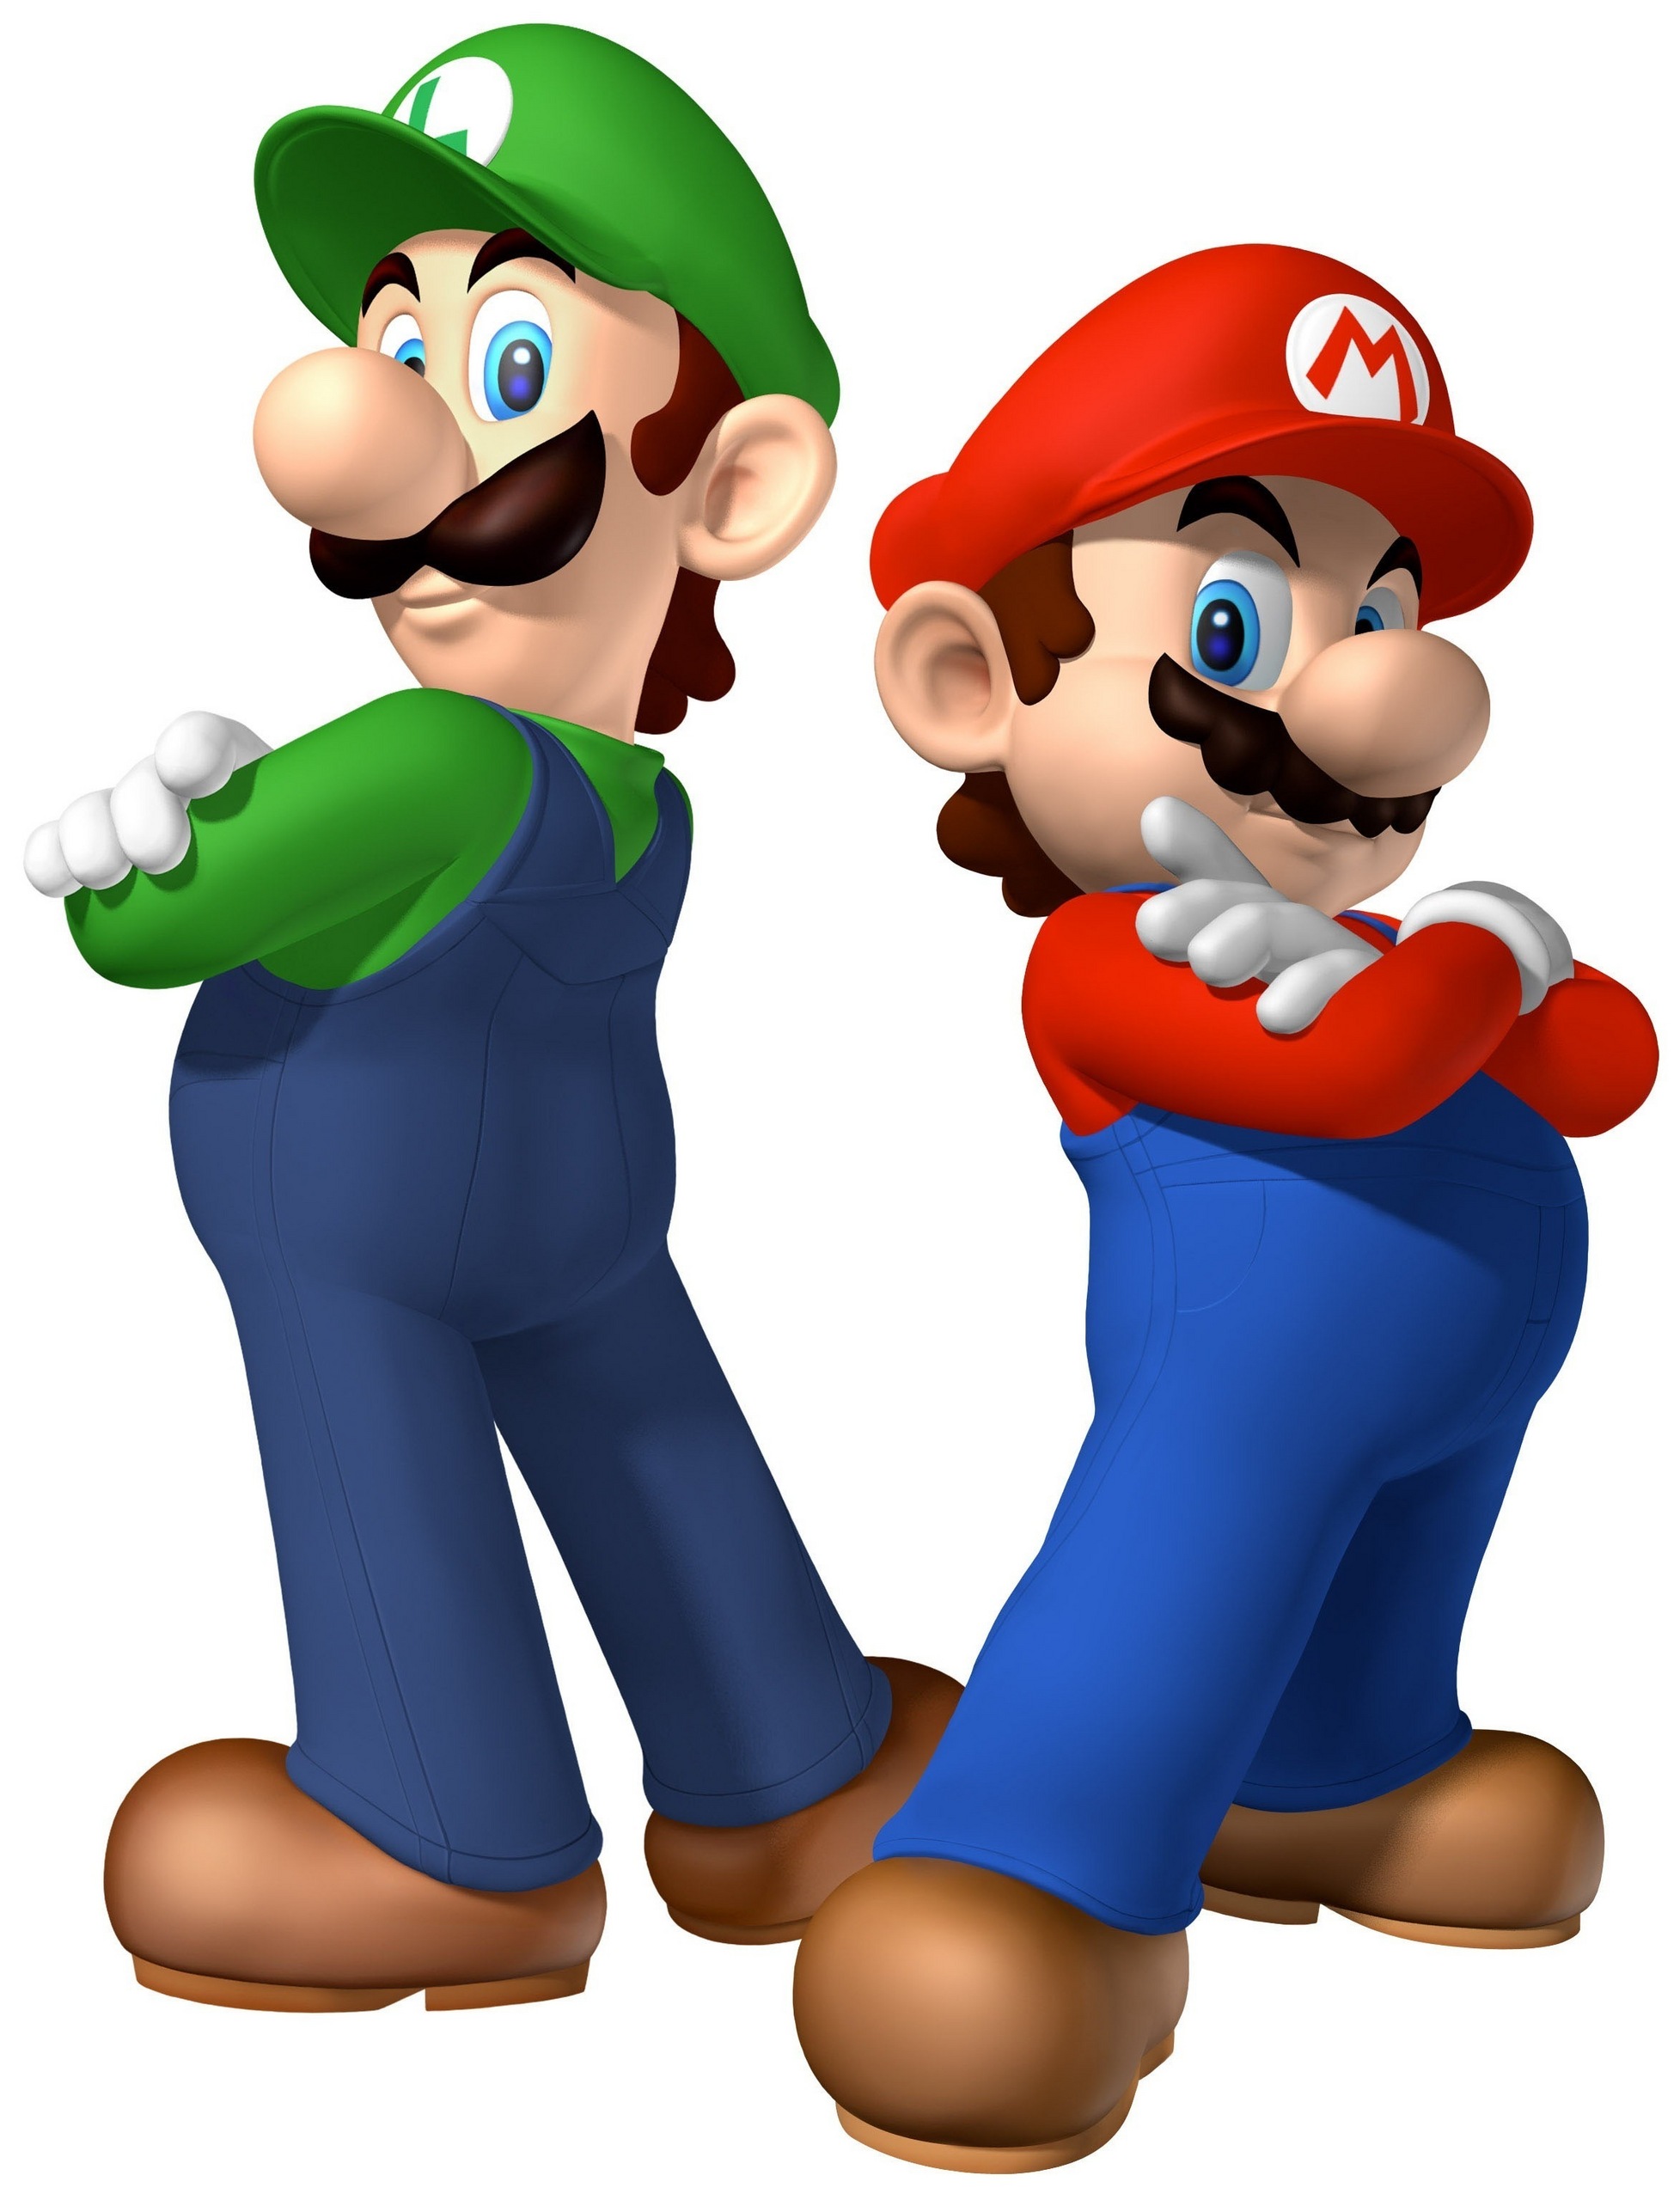 The Mario Bros. | Nintendo | Fandom powered by Wikia